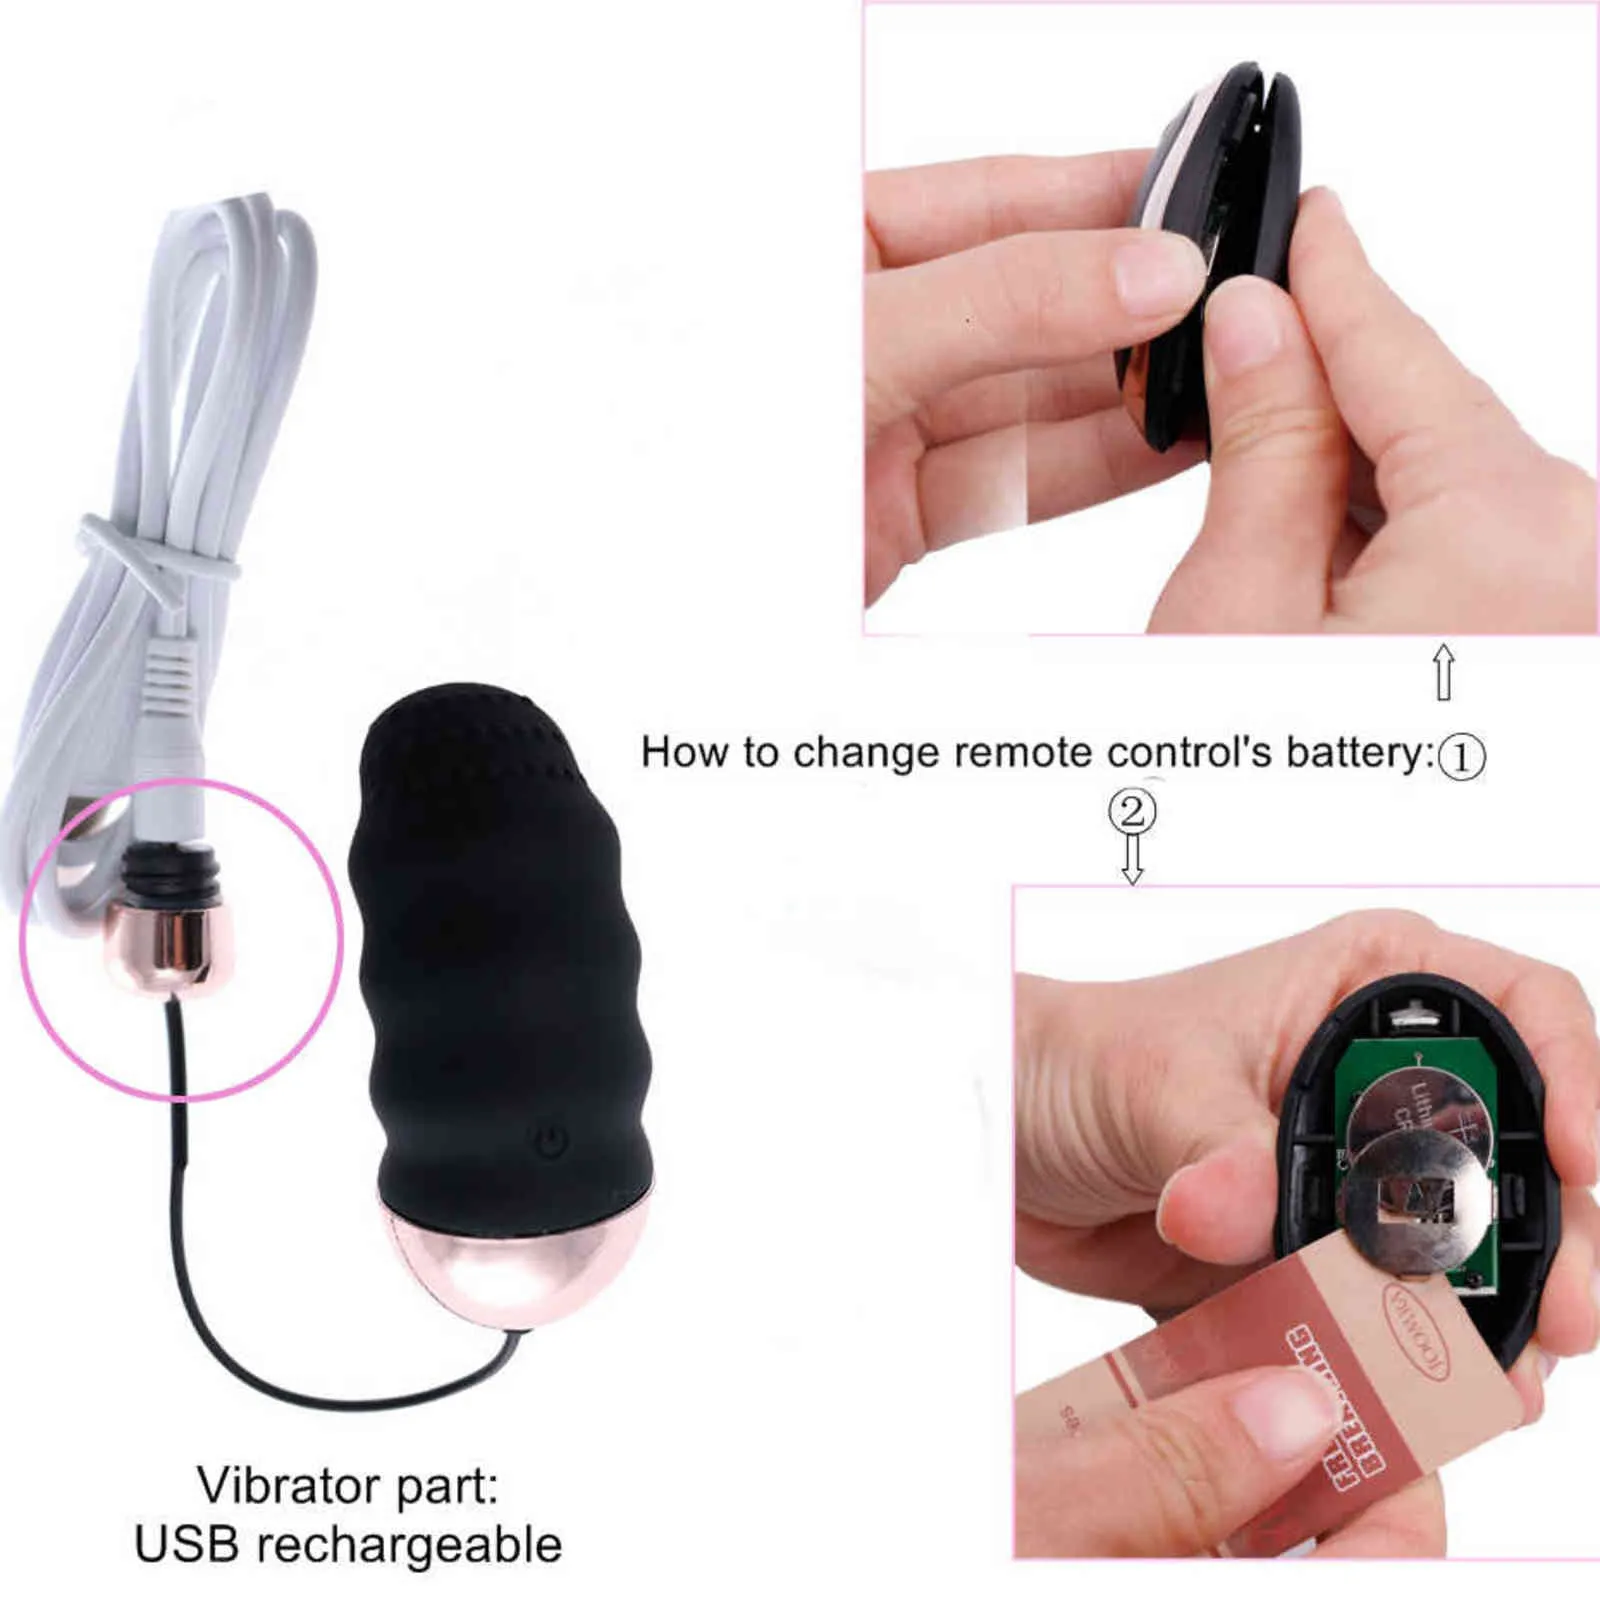 NXY Eier Vibrierendes Ei Ben Wa Ball Kegel Übung Vaginal USB Ladung G-Punkt Klitoris Vibrator Fernbedienung Sexspielzeug für Frauen 1124